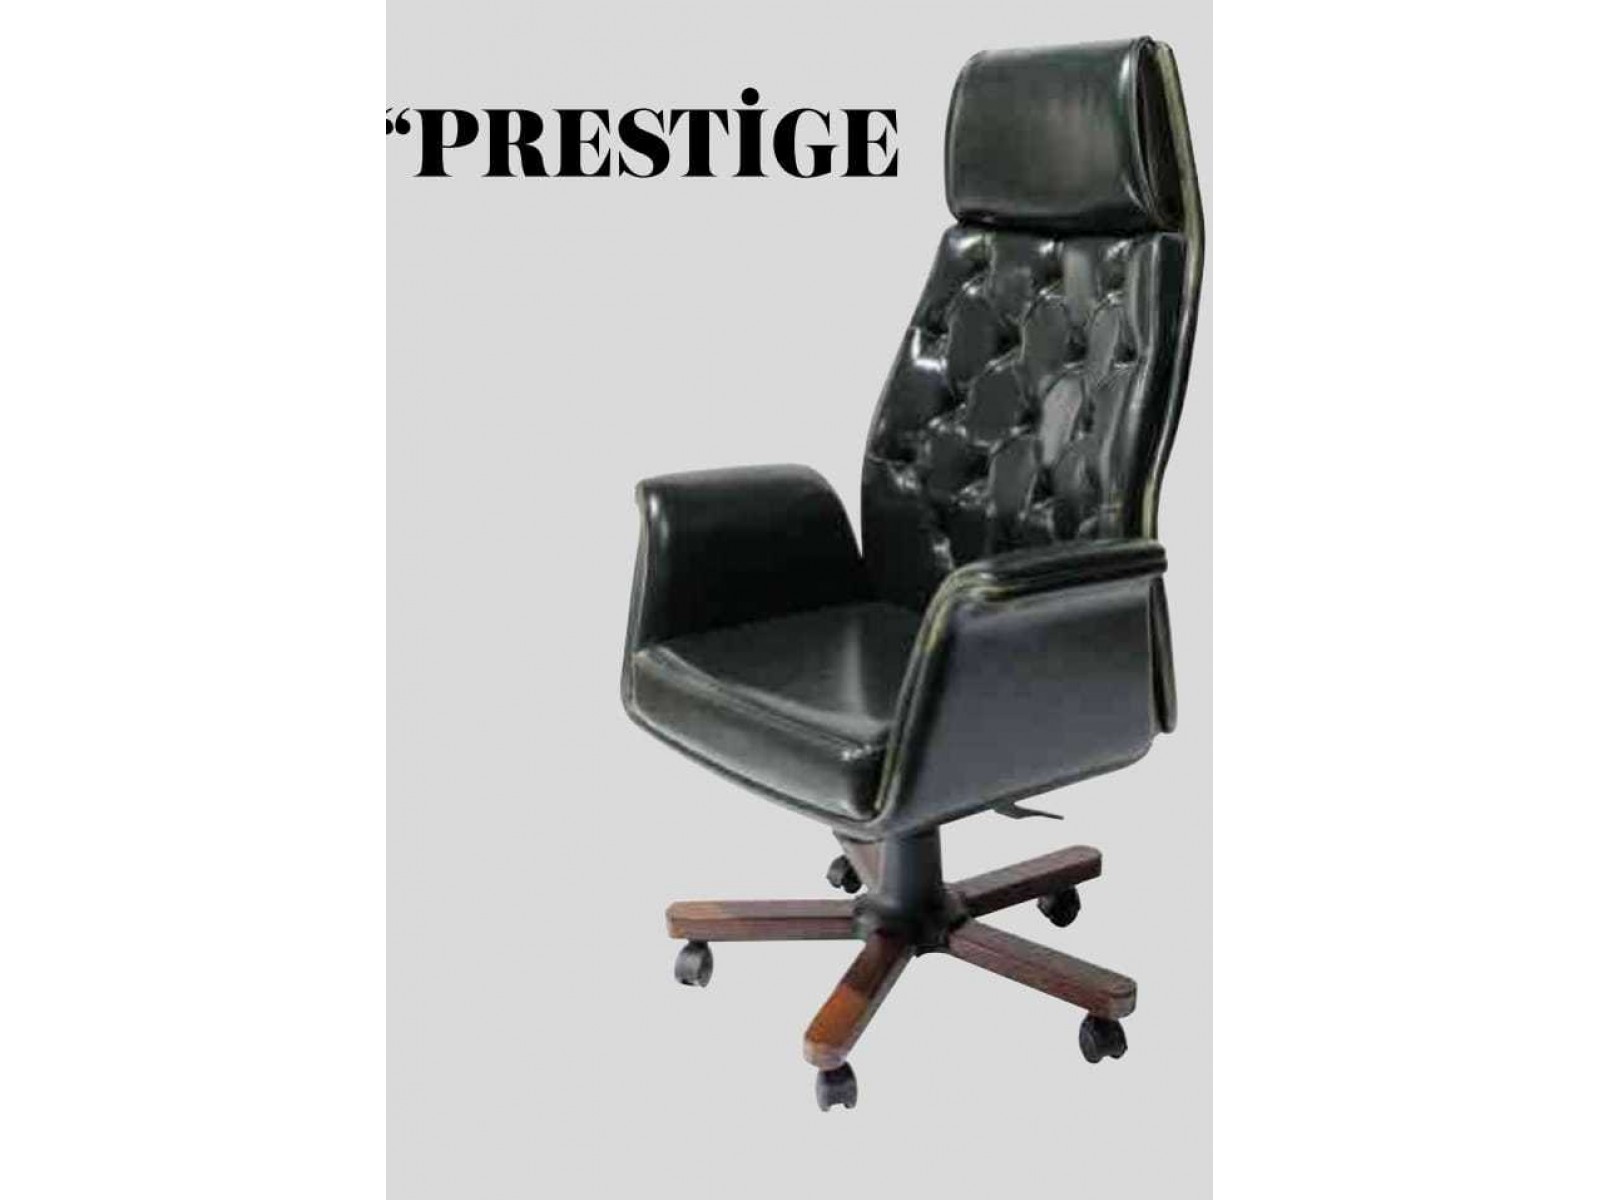 Prestige makam koltuğu